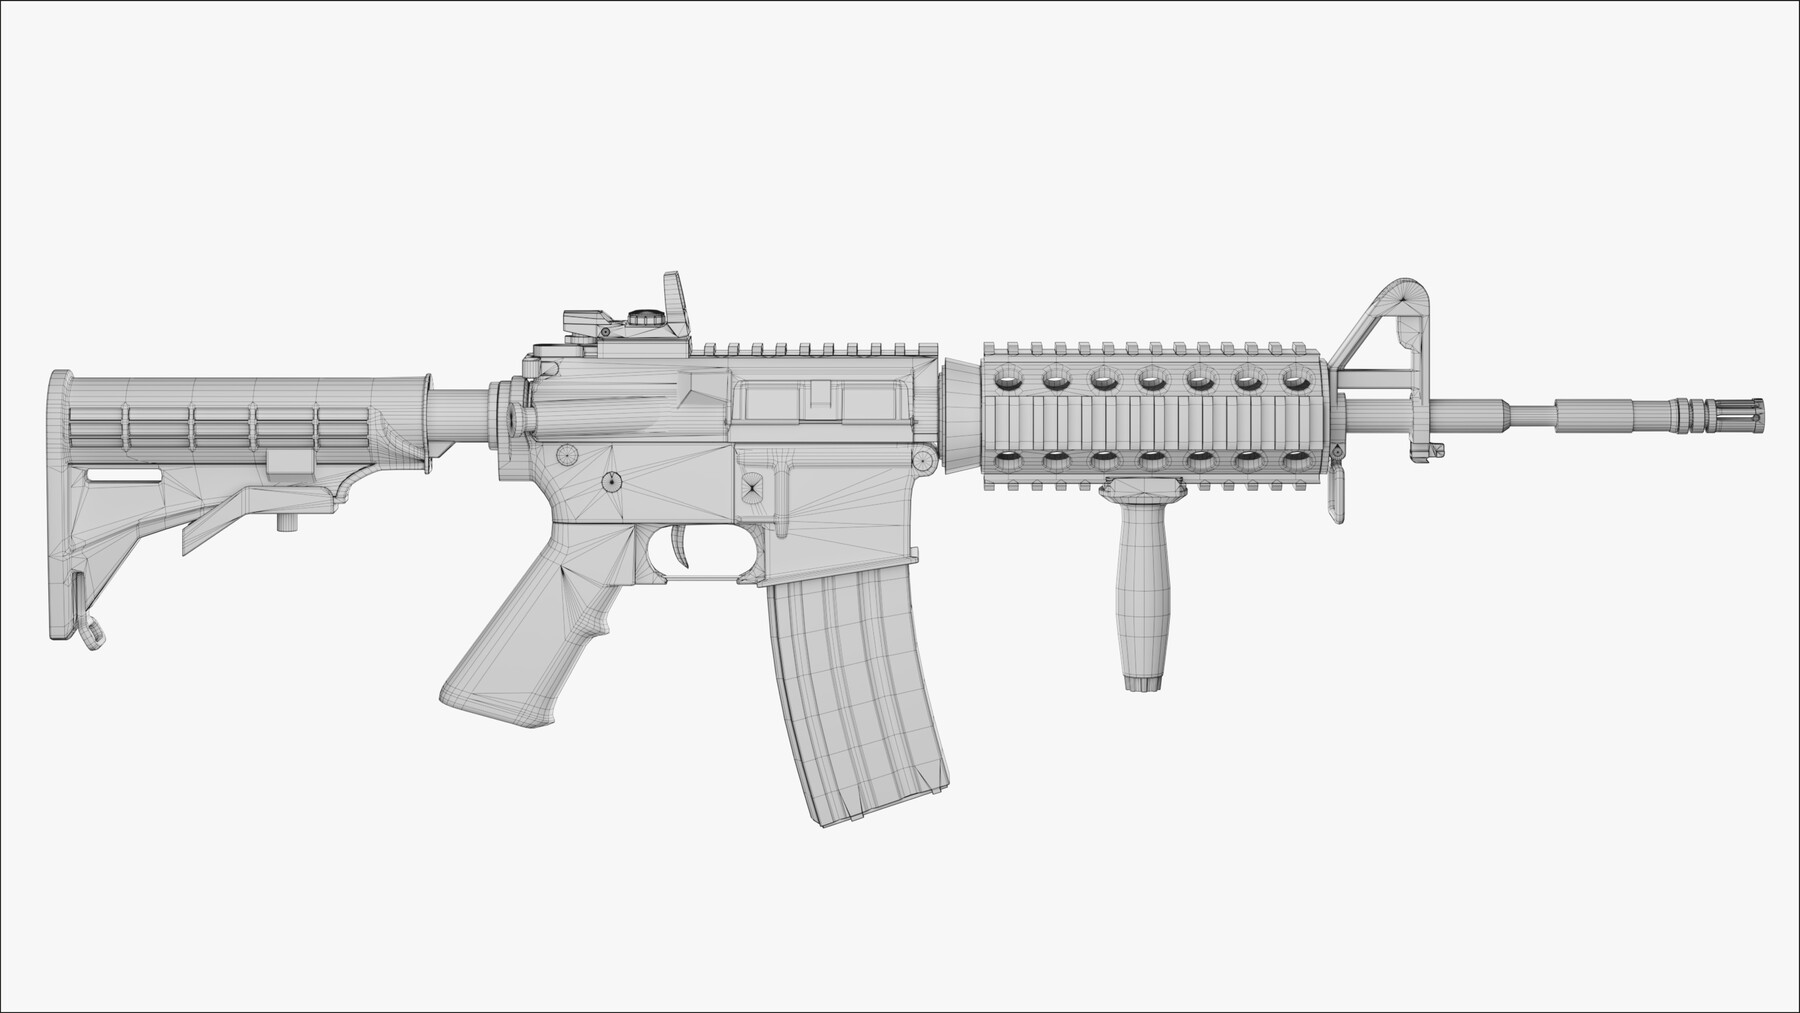 carbine assault rifle